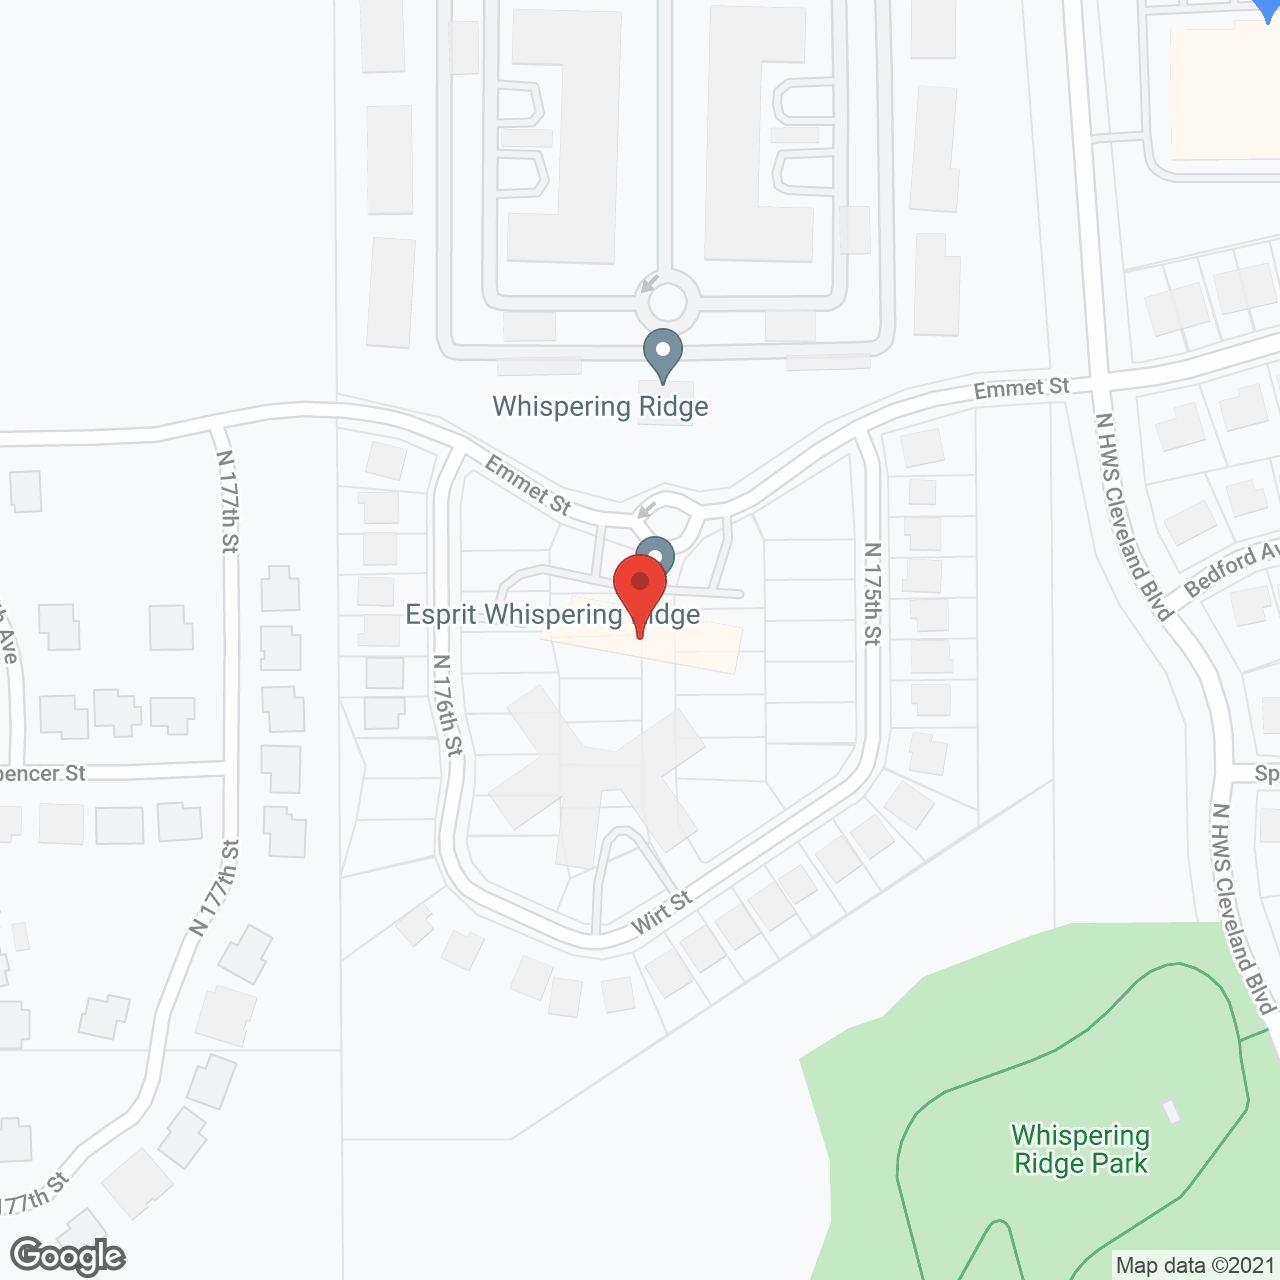 Esprit Whispering Ridge in google map